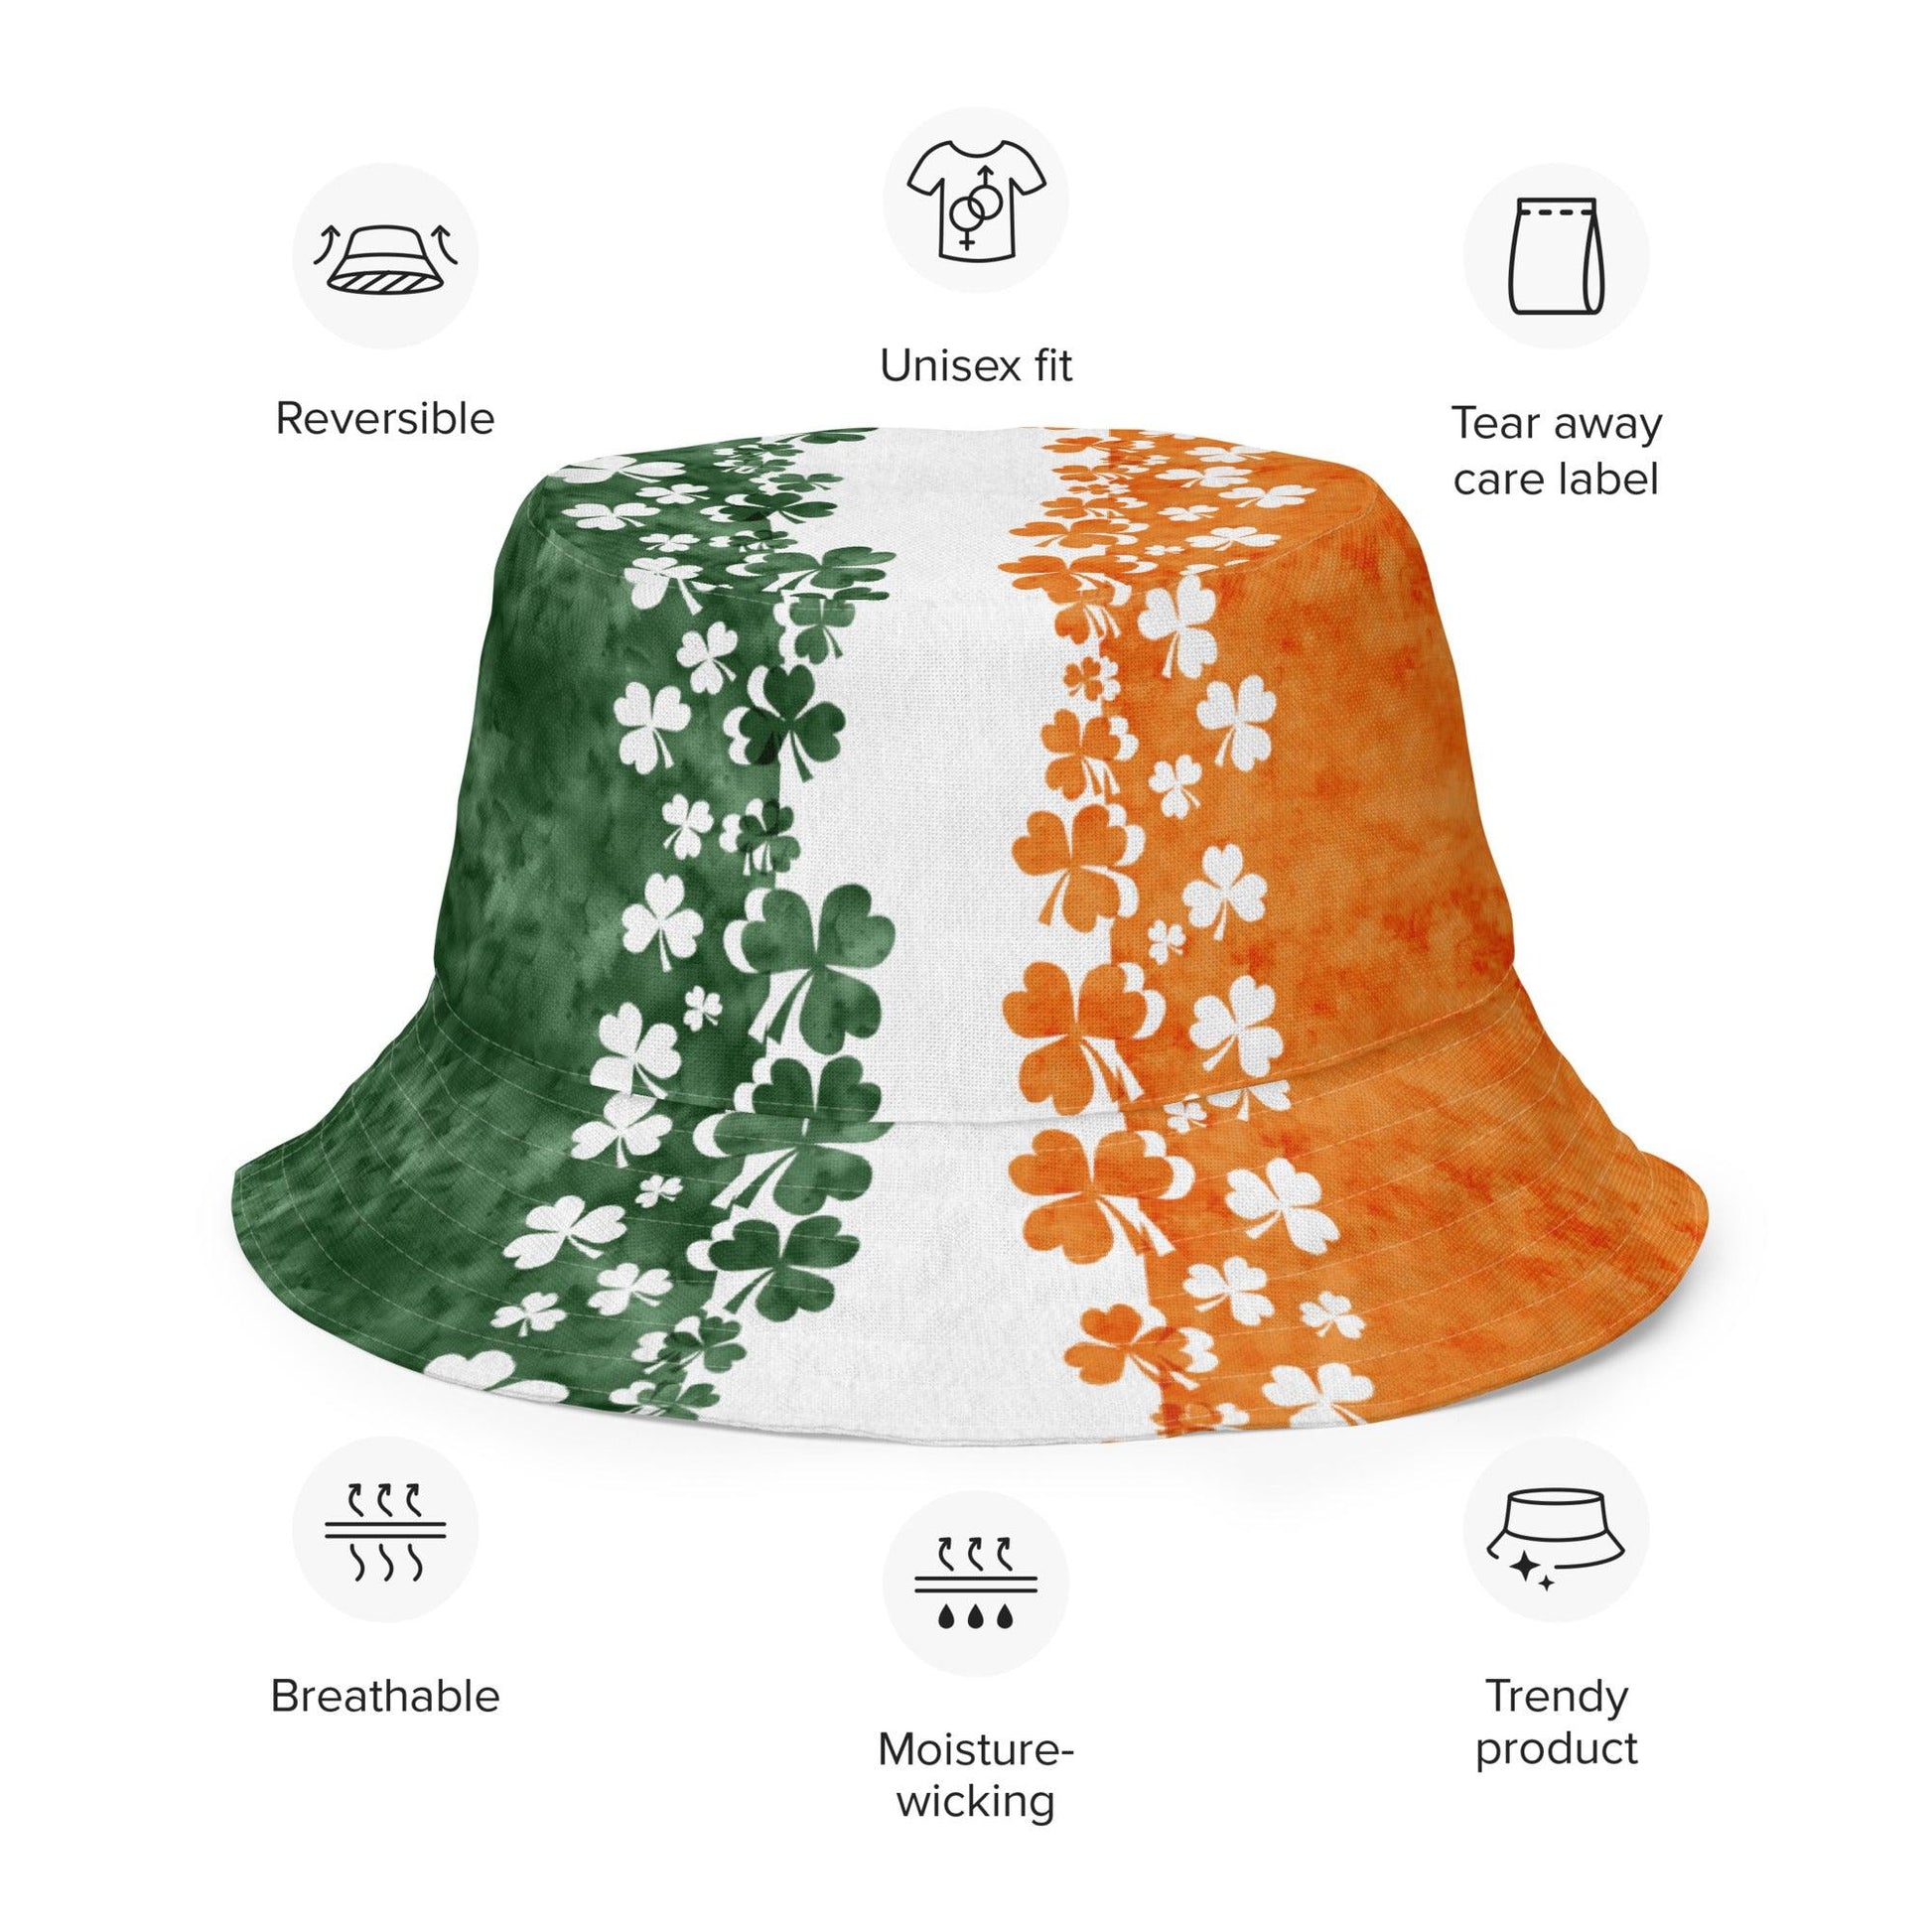 Irish Shamrock Reversible Bucket Hat - The Global Wanderer